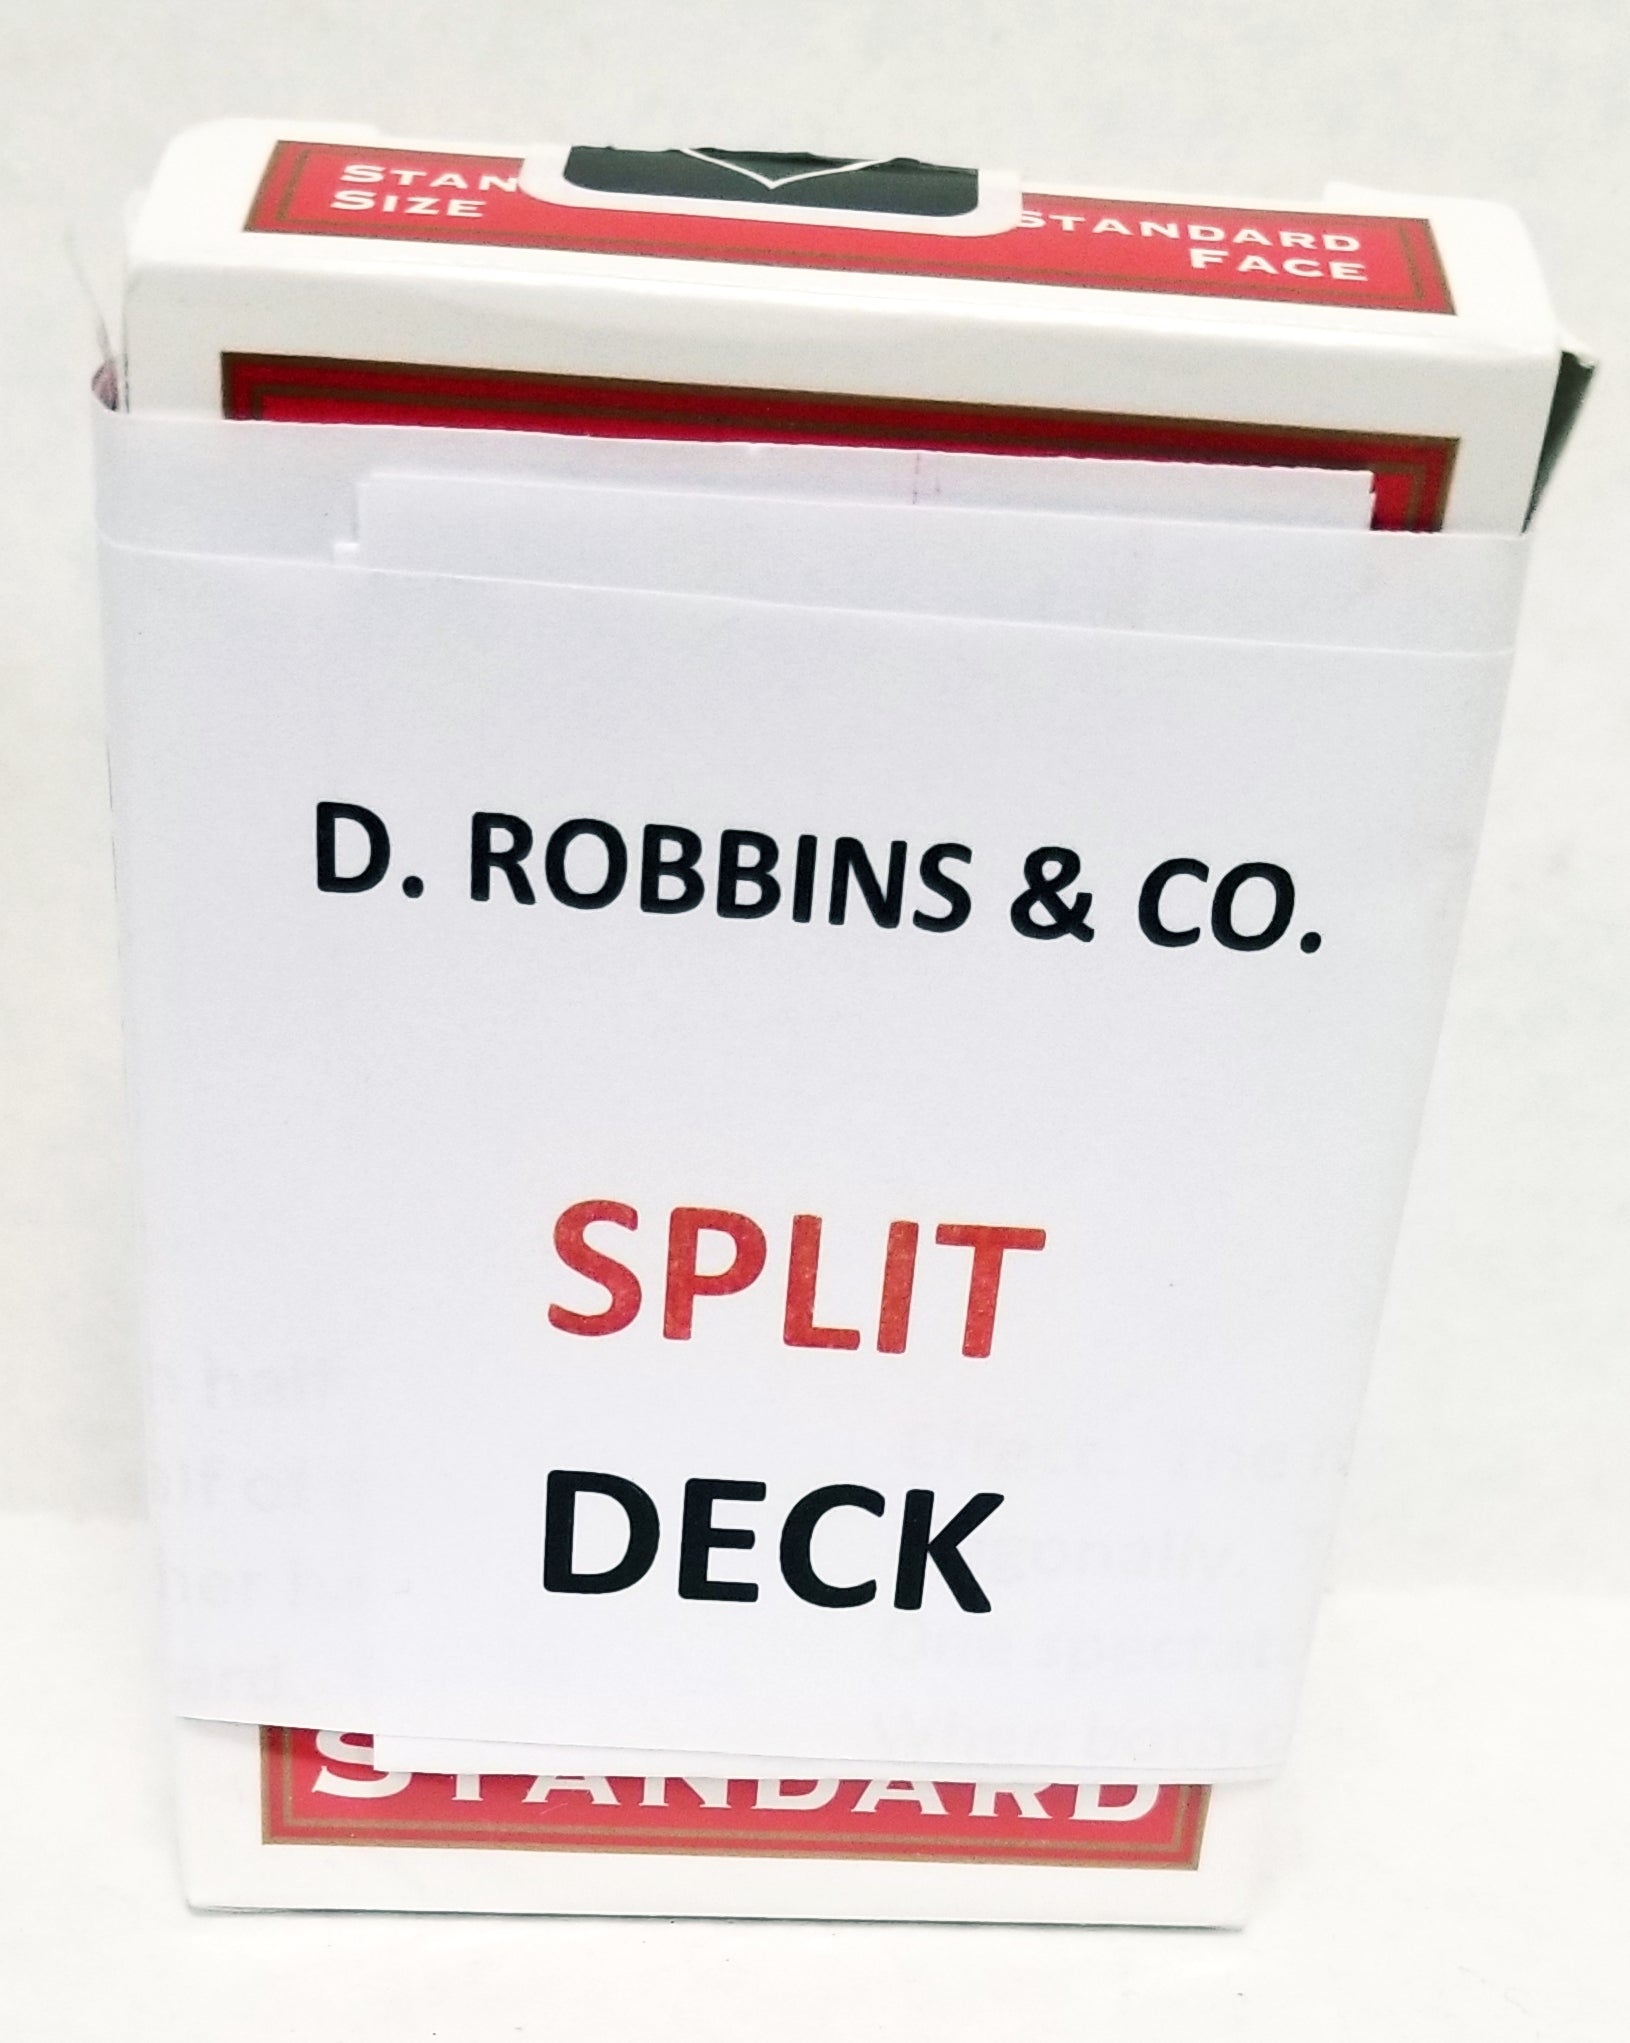 Split Deck - Bicycle Poker (E-Z) - Red backs